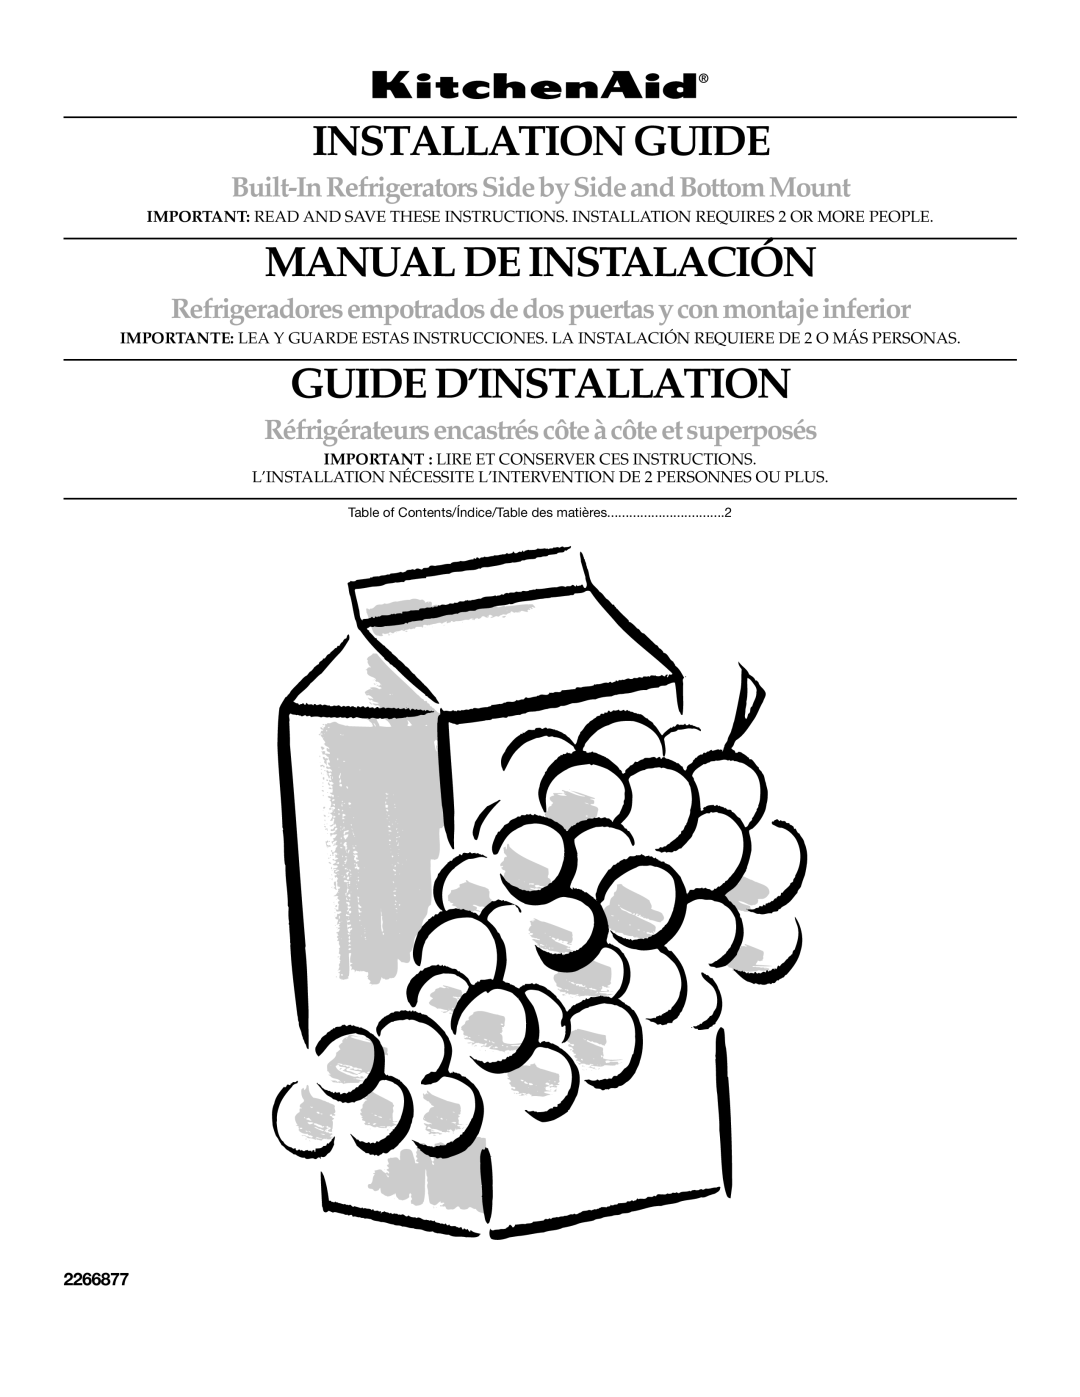 KitchenAid 2266877 manual Installation Guide, Manual DE Instalación, Guide D’INSTALLATION 